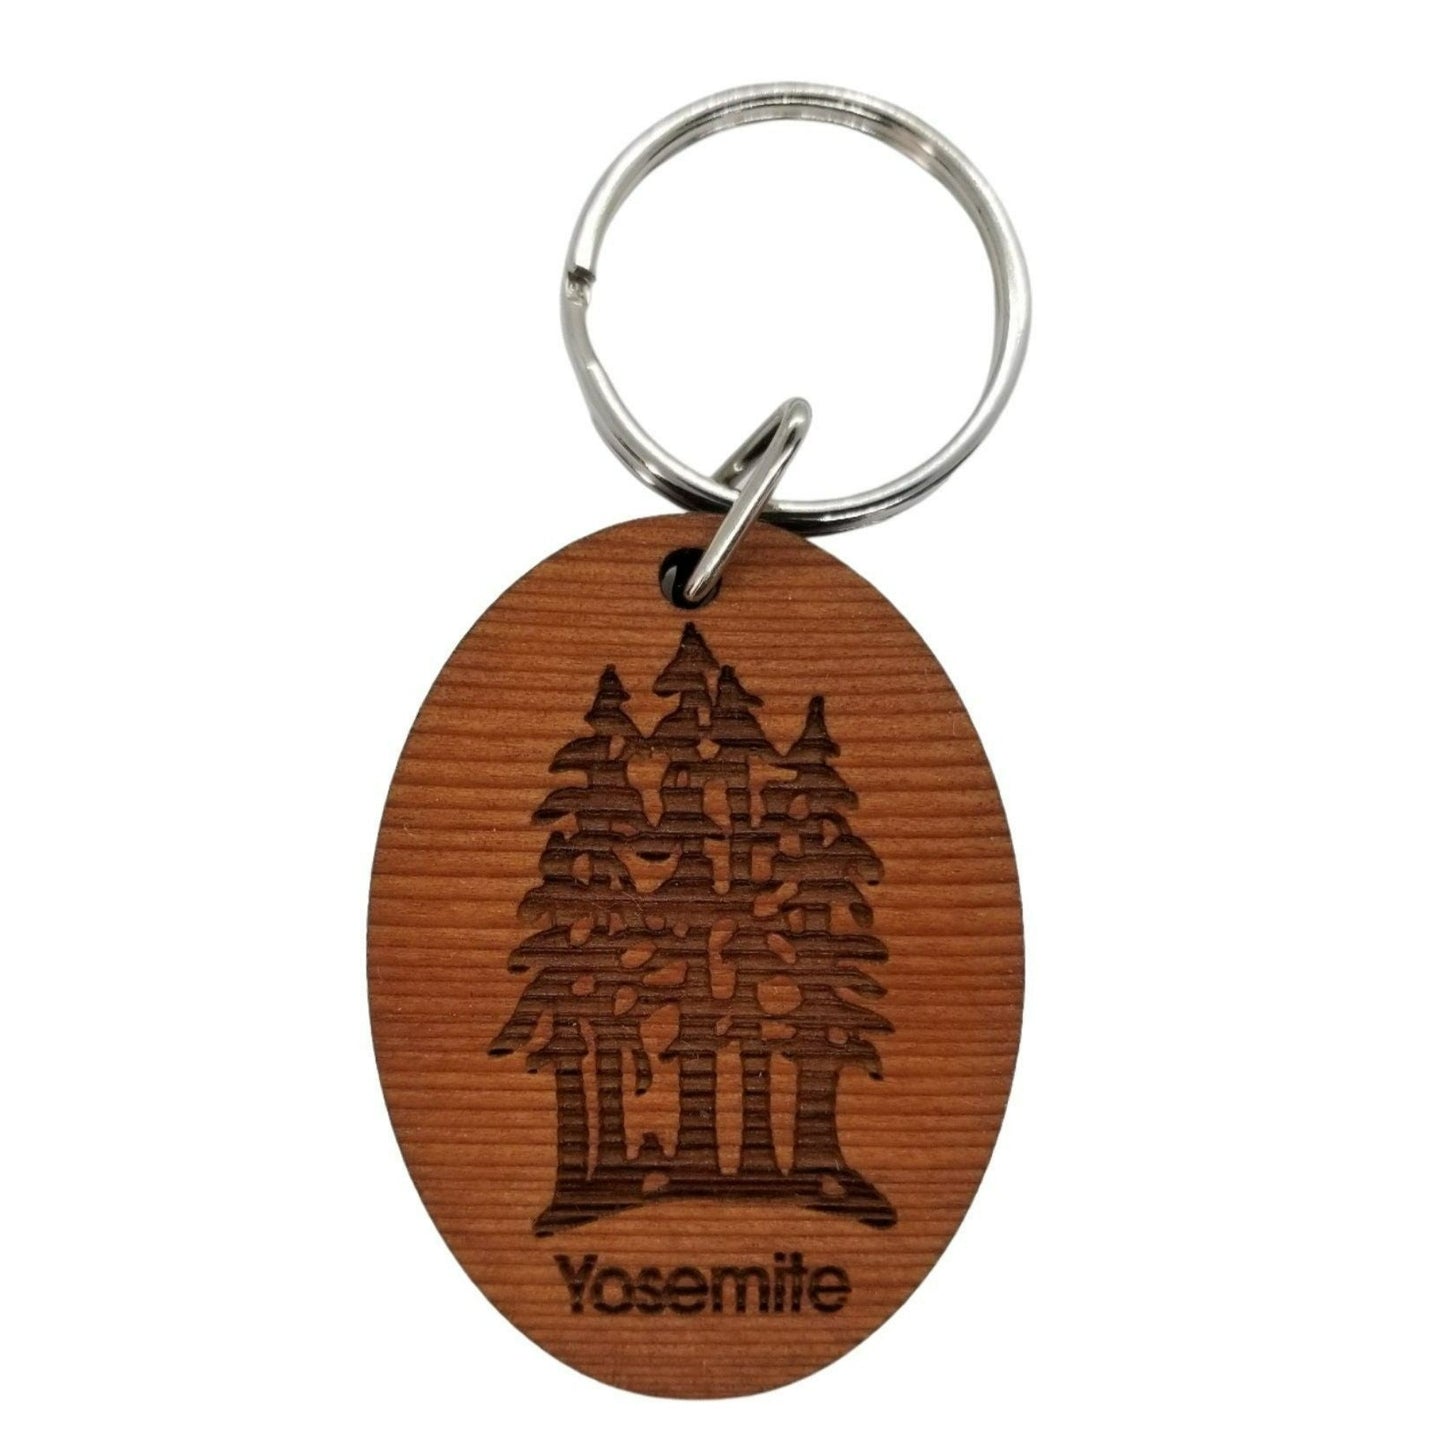 Wholesale Yosemite National Park Redwood Trees Grove Wood Keychain California Souvenir - Key Chain Key Tag Key Ring Key Fob